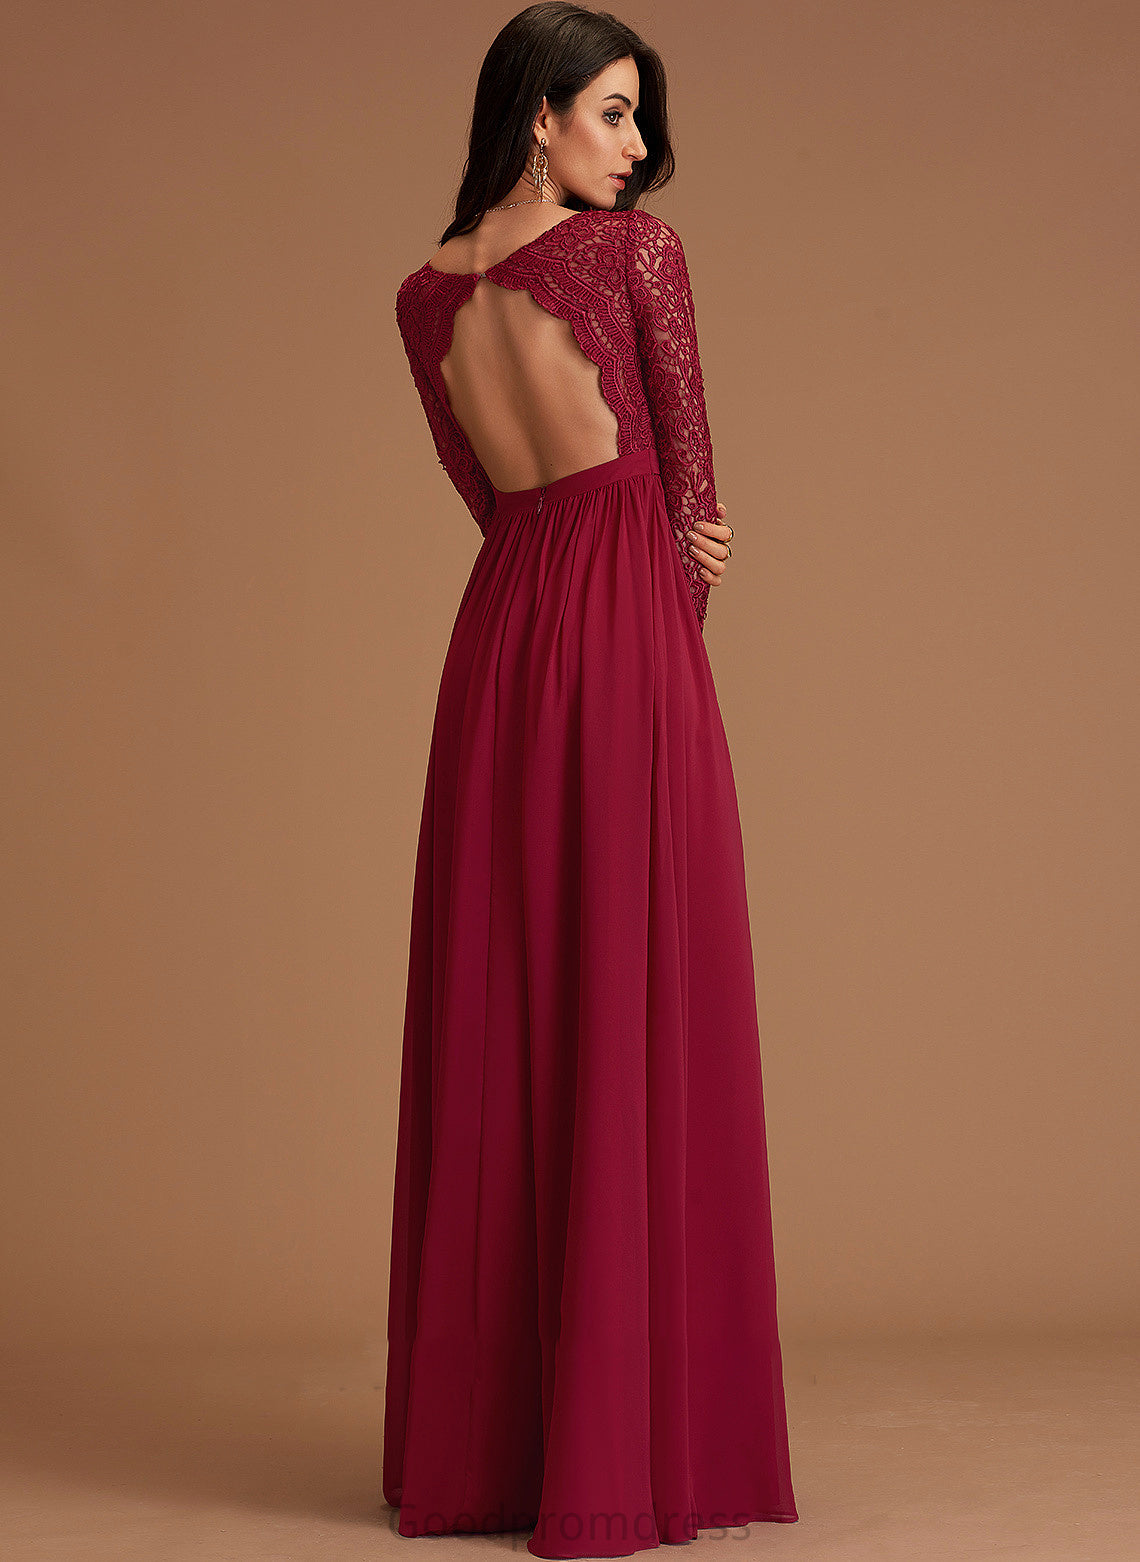 Silhouette Length Neckline Floor-Length Embellishment Fabric V-neck Lace A-Line Lillian Floor Length Natural Waist Bridesmaid Dresses